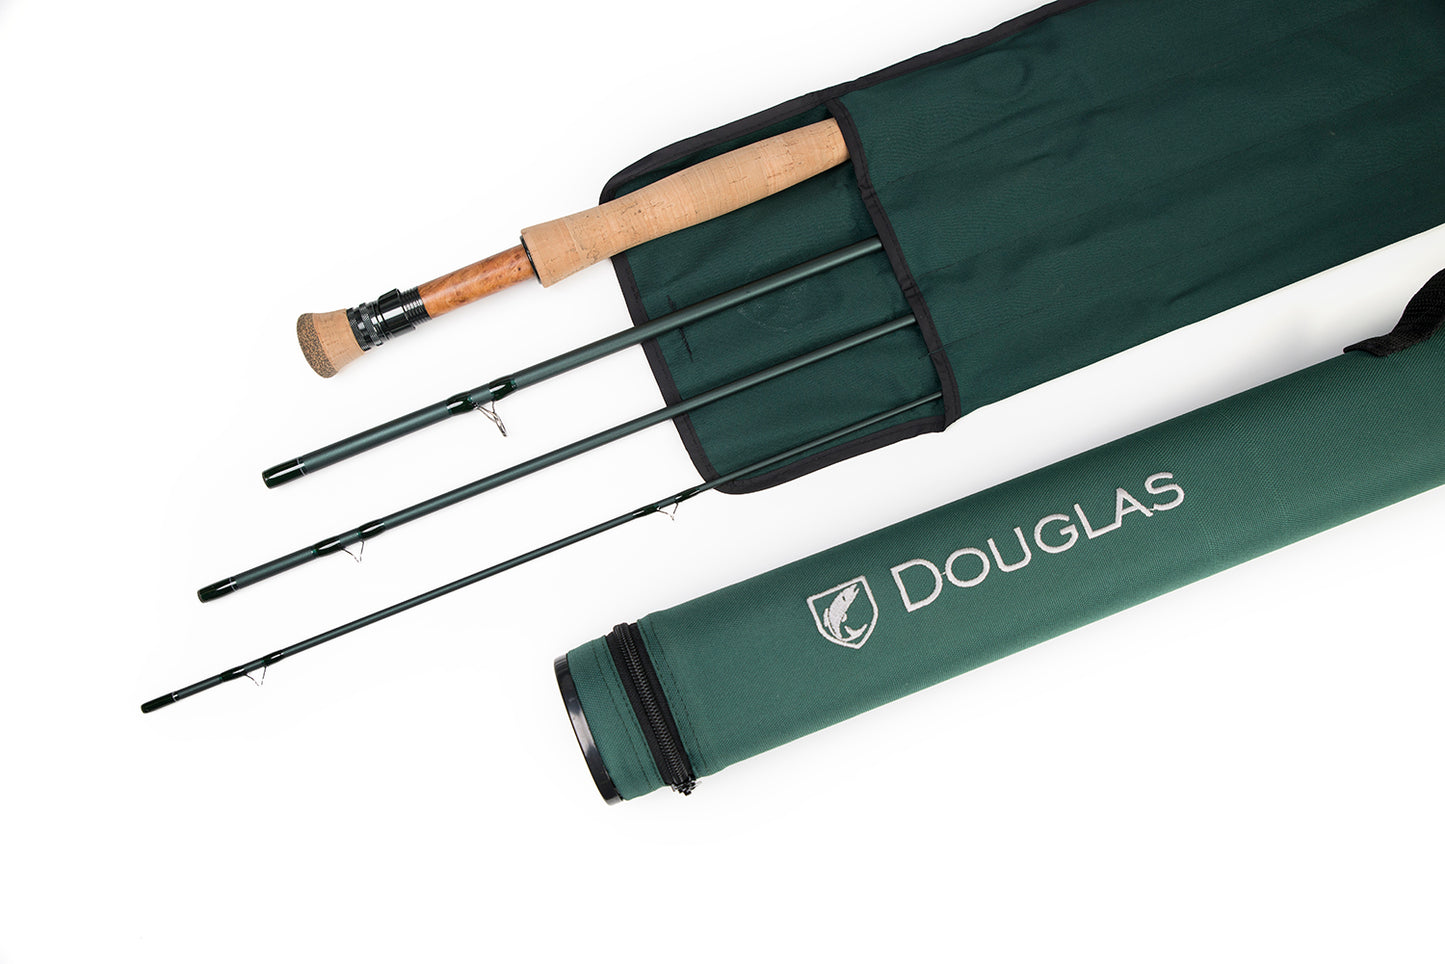 Douglas DXF Fly Rod Series